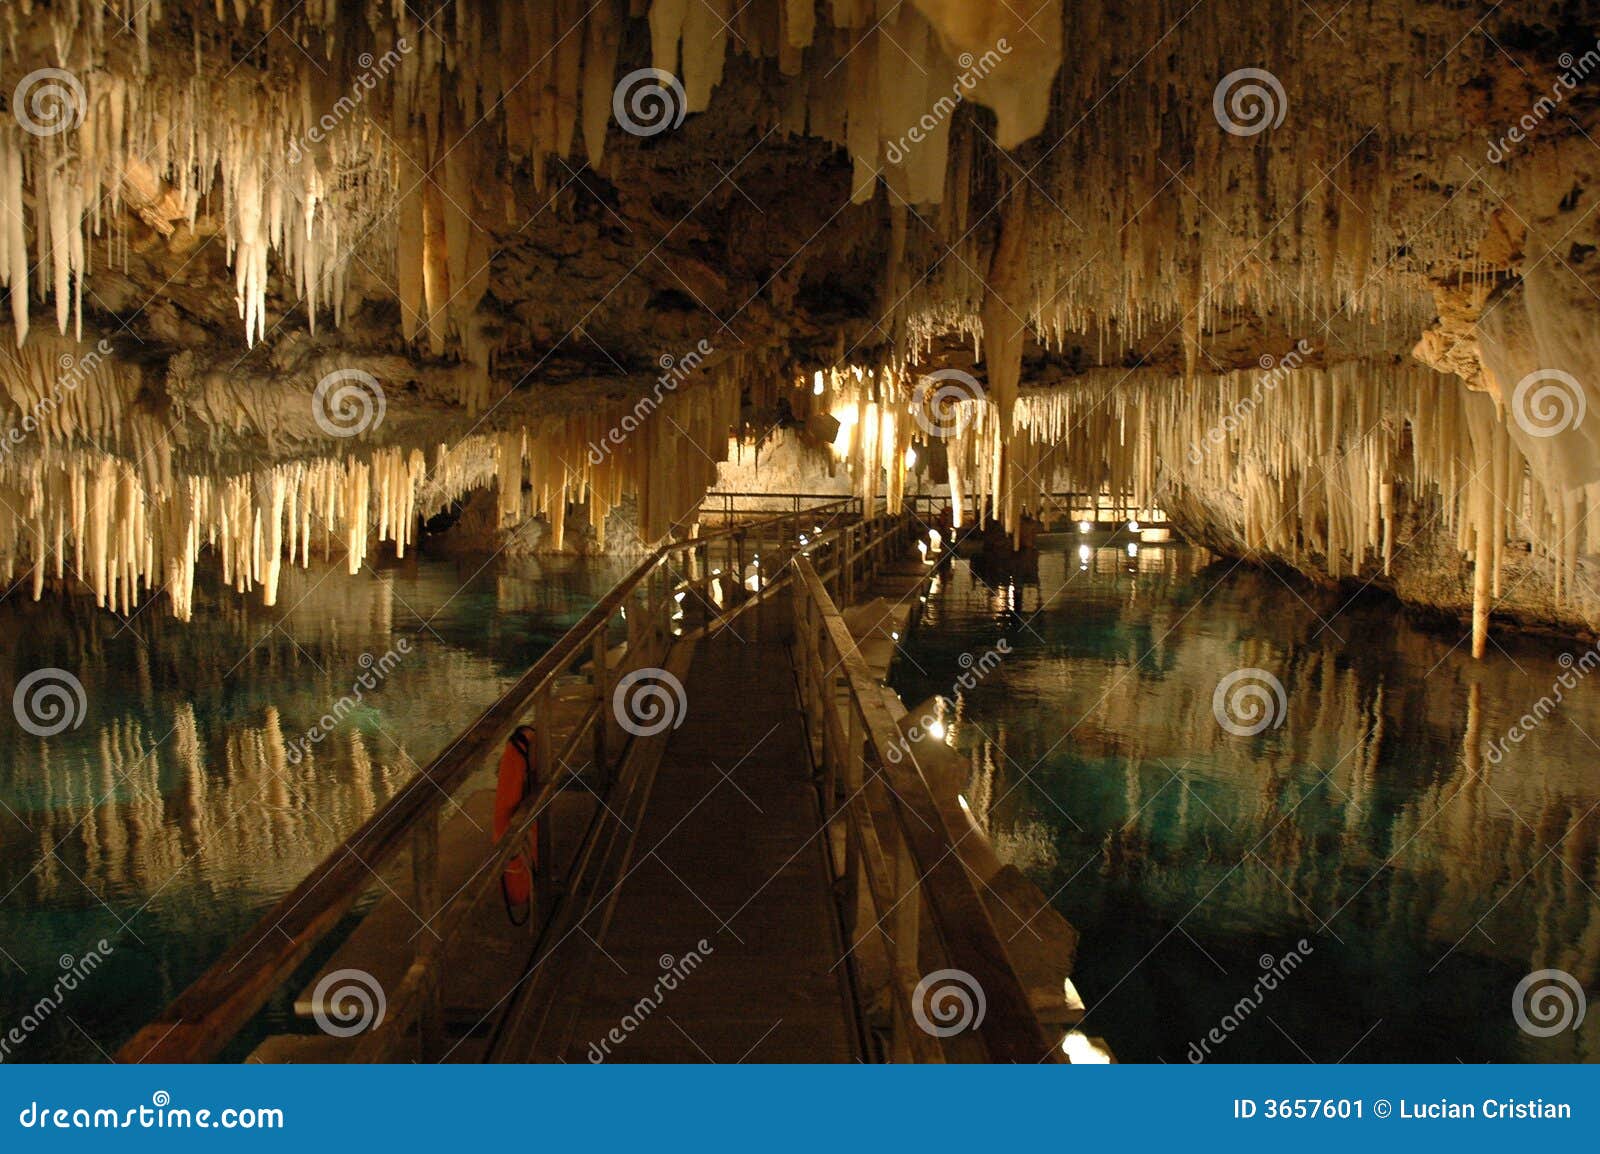 the underground beauty of bermuda